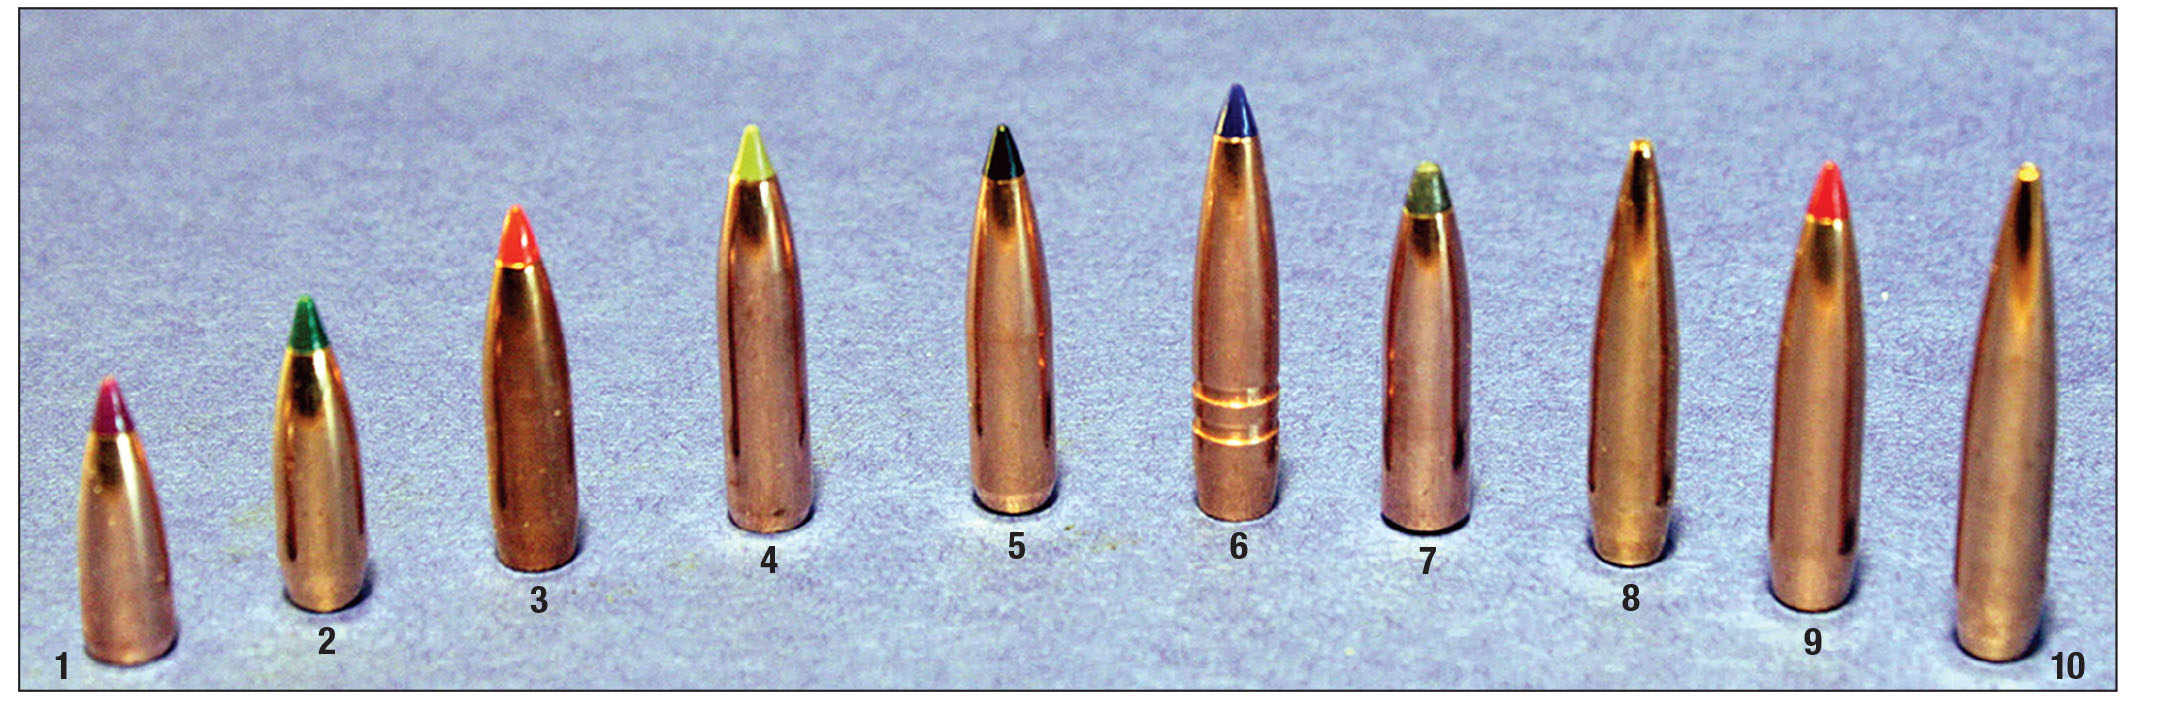 Bullets tested include the (1) Nosler 55-grain Ballistic Tip, (2) Sierra 70 BlitzKing, (3) Hornady 87 V-MAX, (4) Nosler 90 E-Tip, (5) Swift 90 Scirocco II, (6) Barnes 95 LRX, (7) Nosler 100 Partition, (8) Berger 105 Hunting VLD, (9) Hornady 108 ELD-M and the (10) Berger 115-grain Berger Hunting VLD.